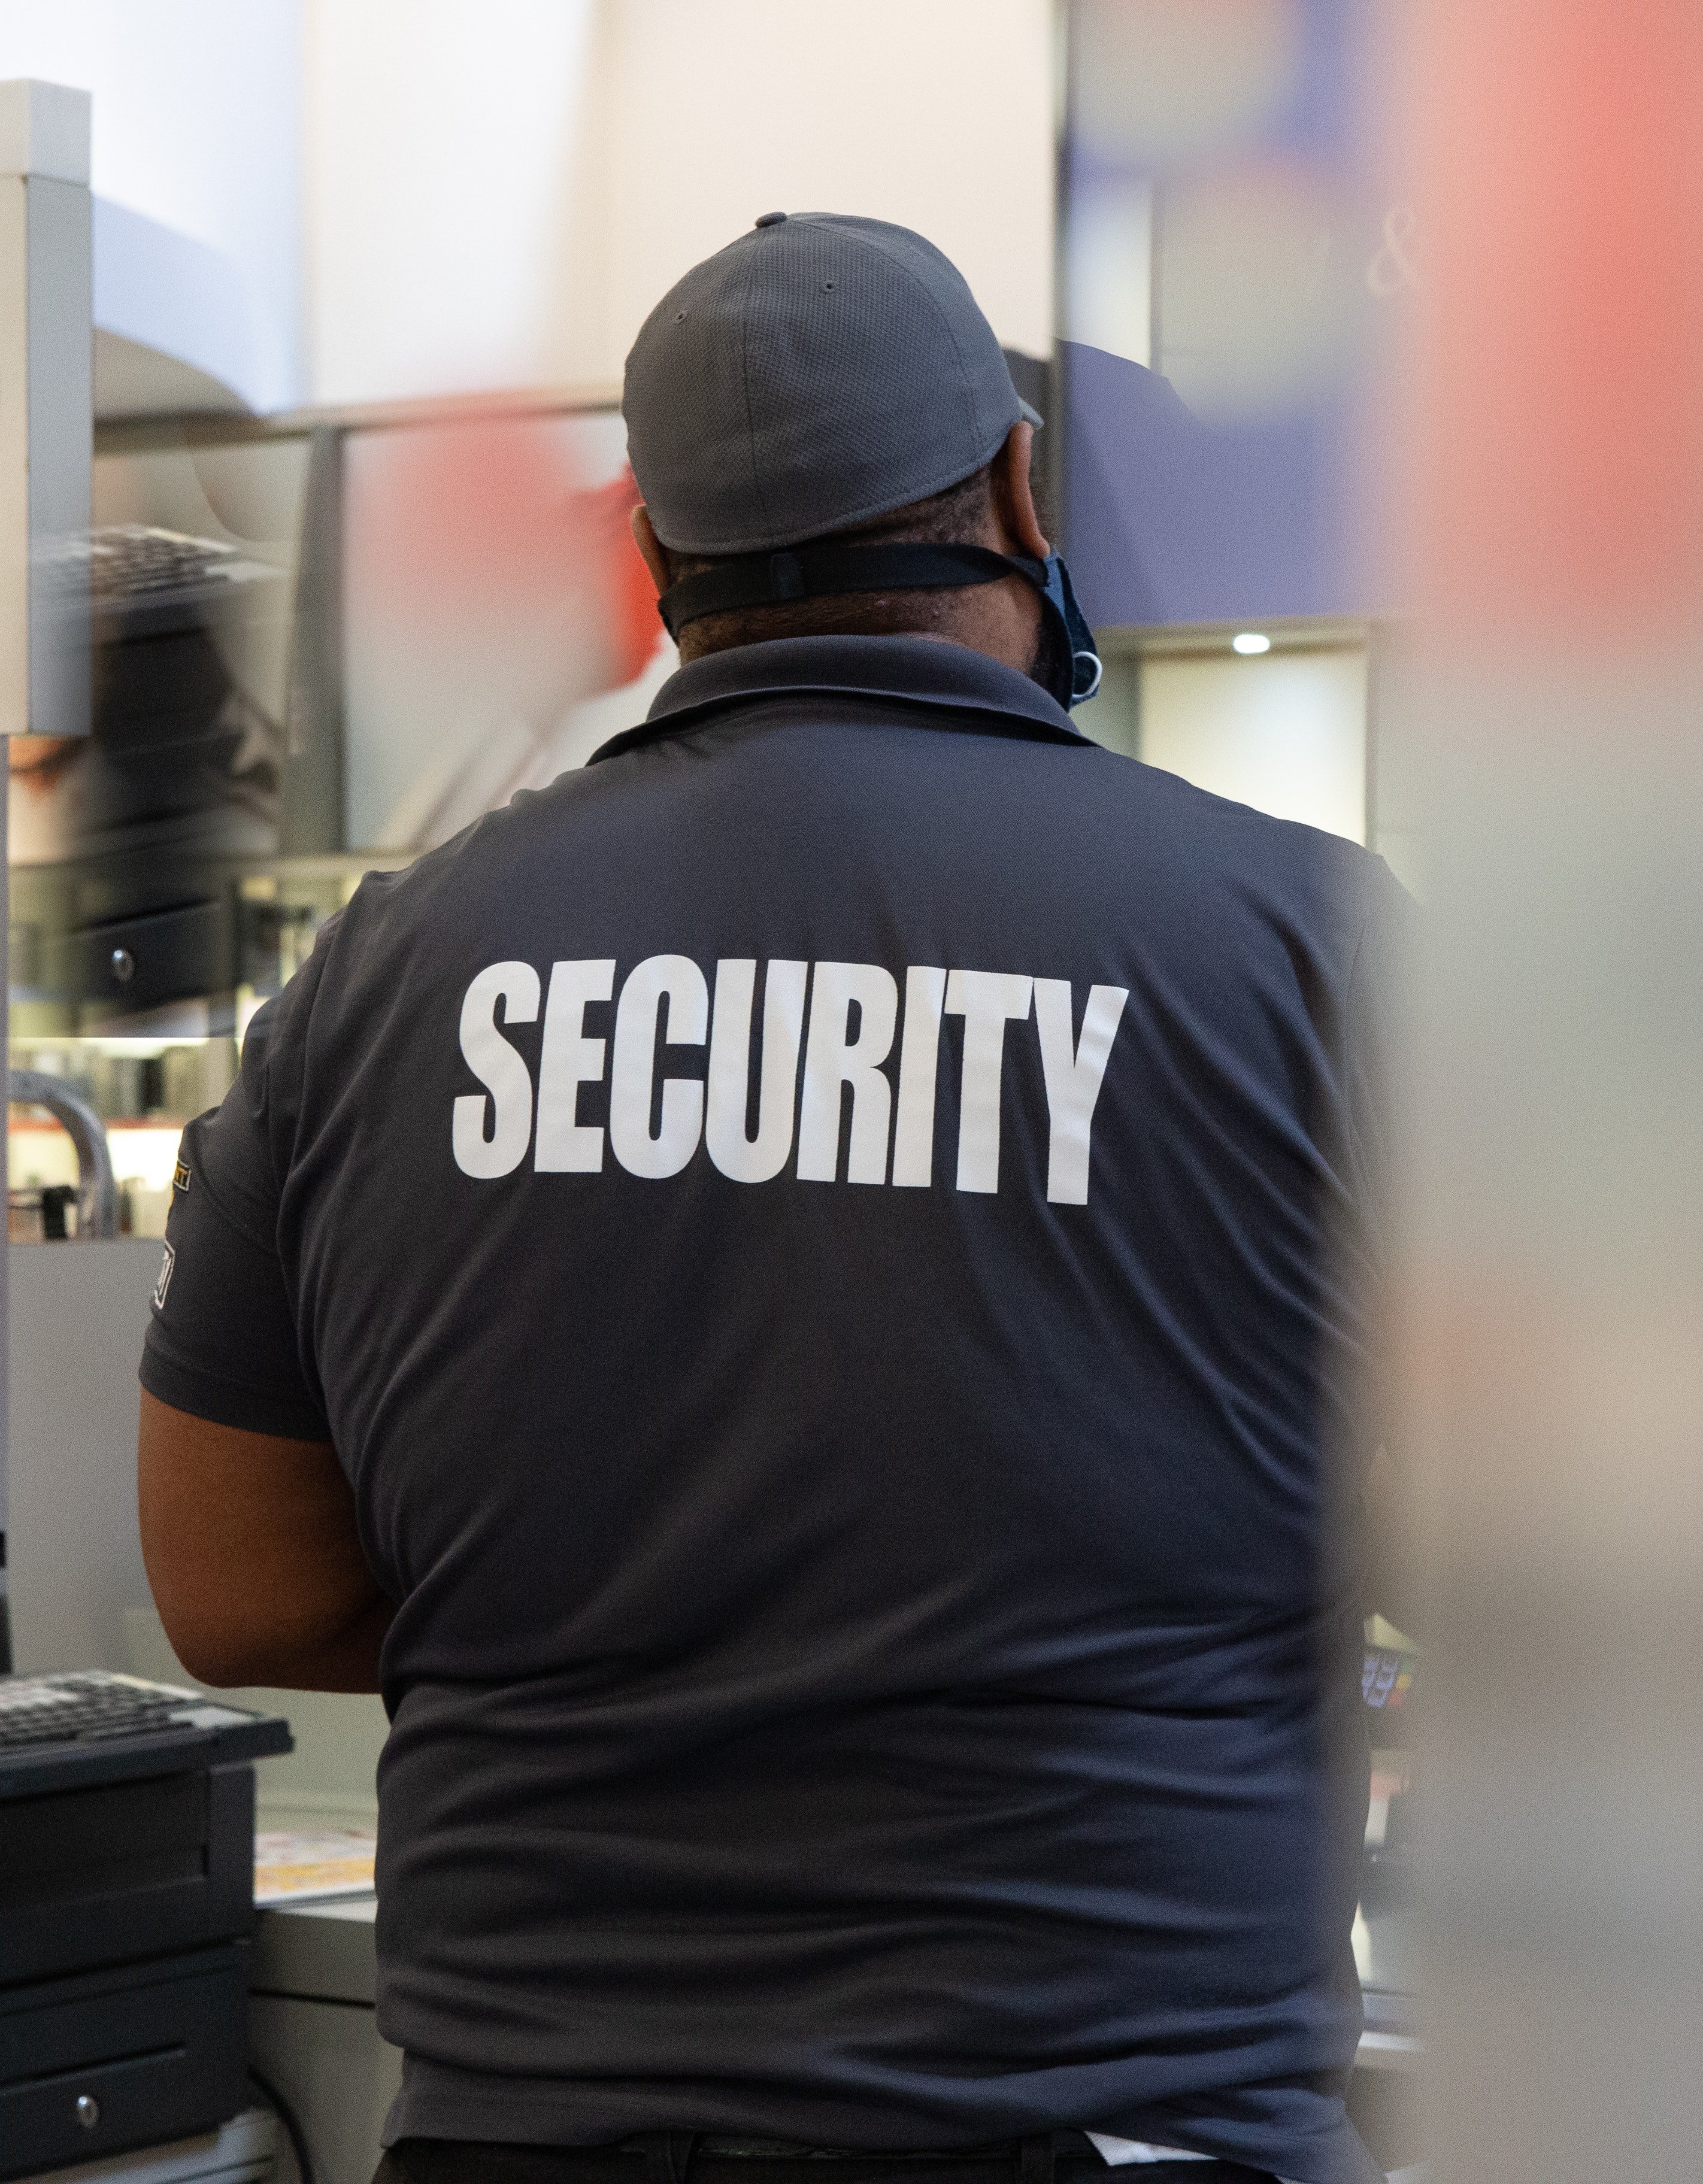 Security guard. | Source: Pexels